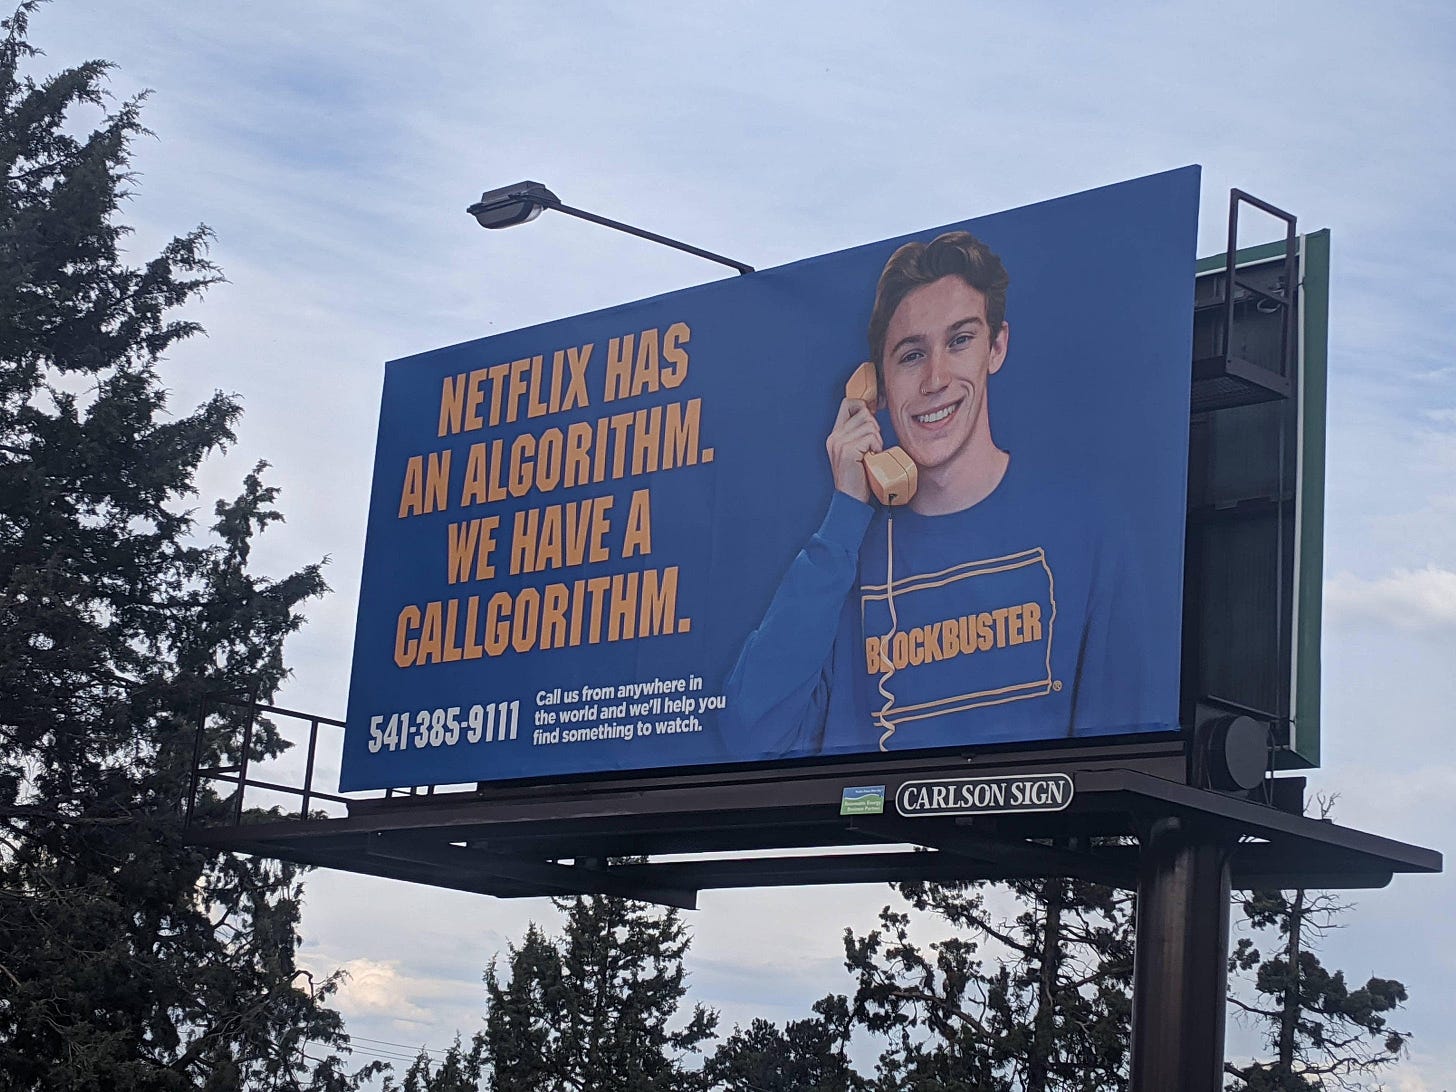 Blockbuster billboard knocking Netflix. : r/agedlikemilk